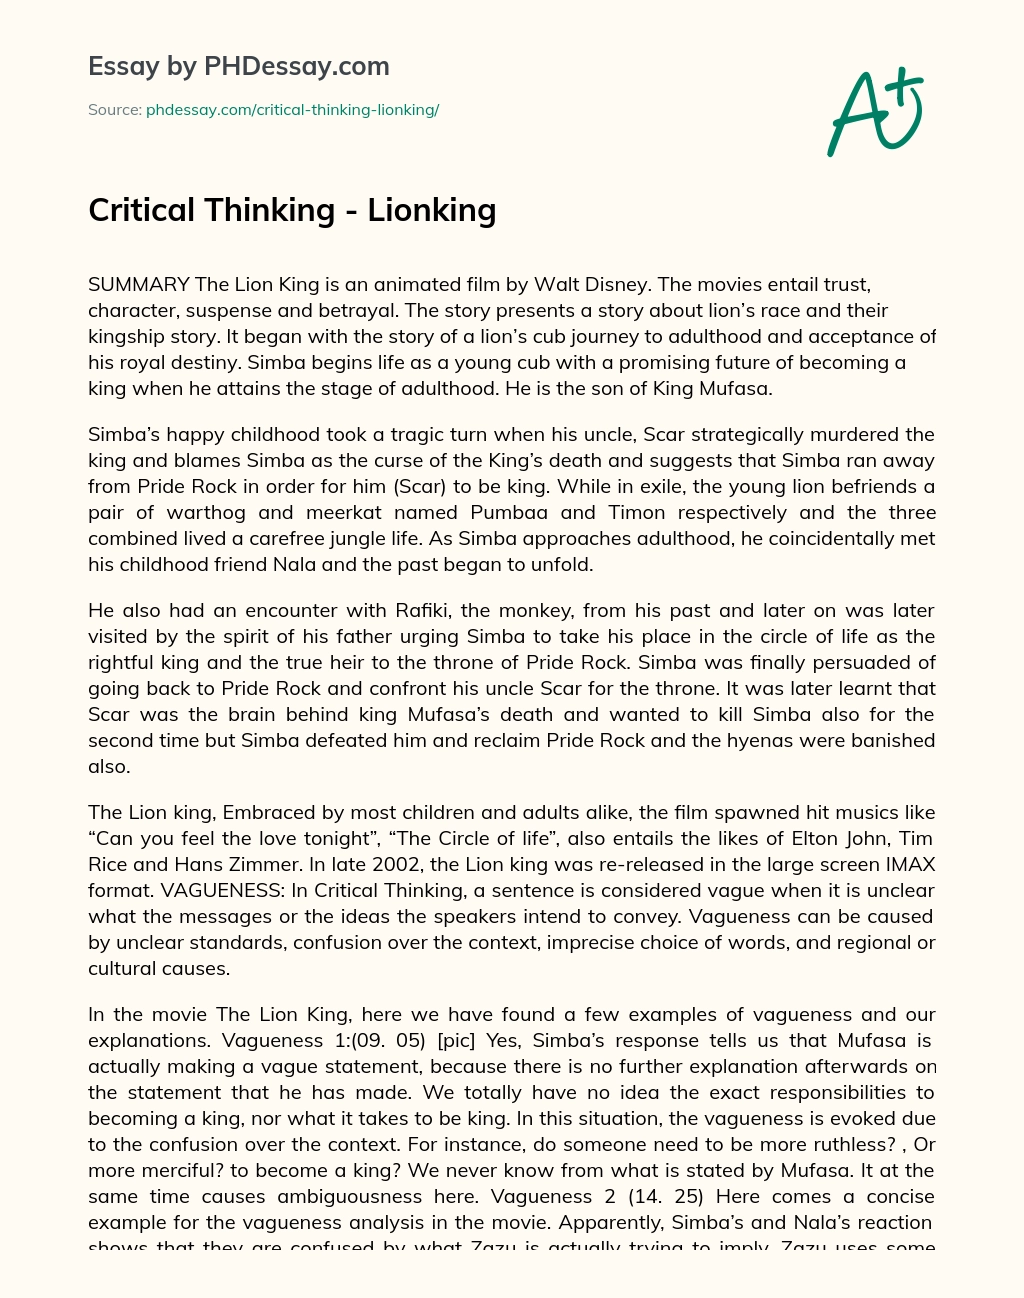 Critical Thinking – Lionking essay